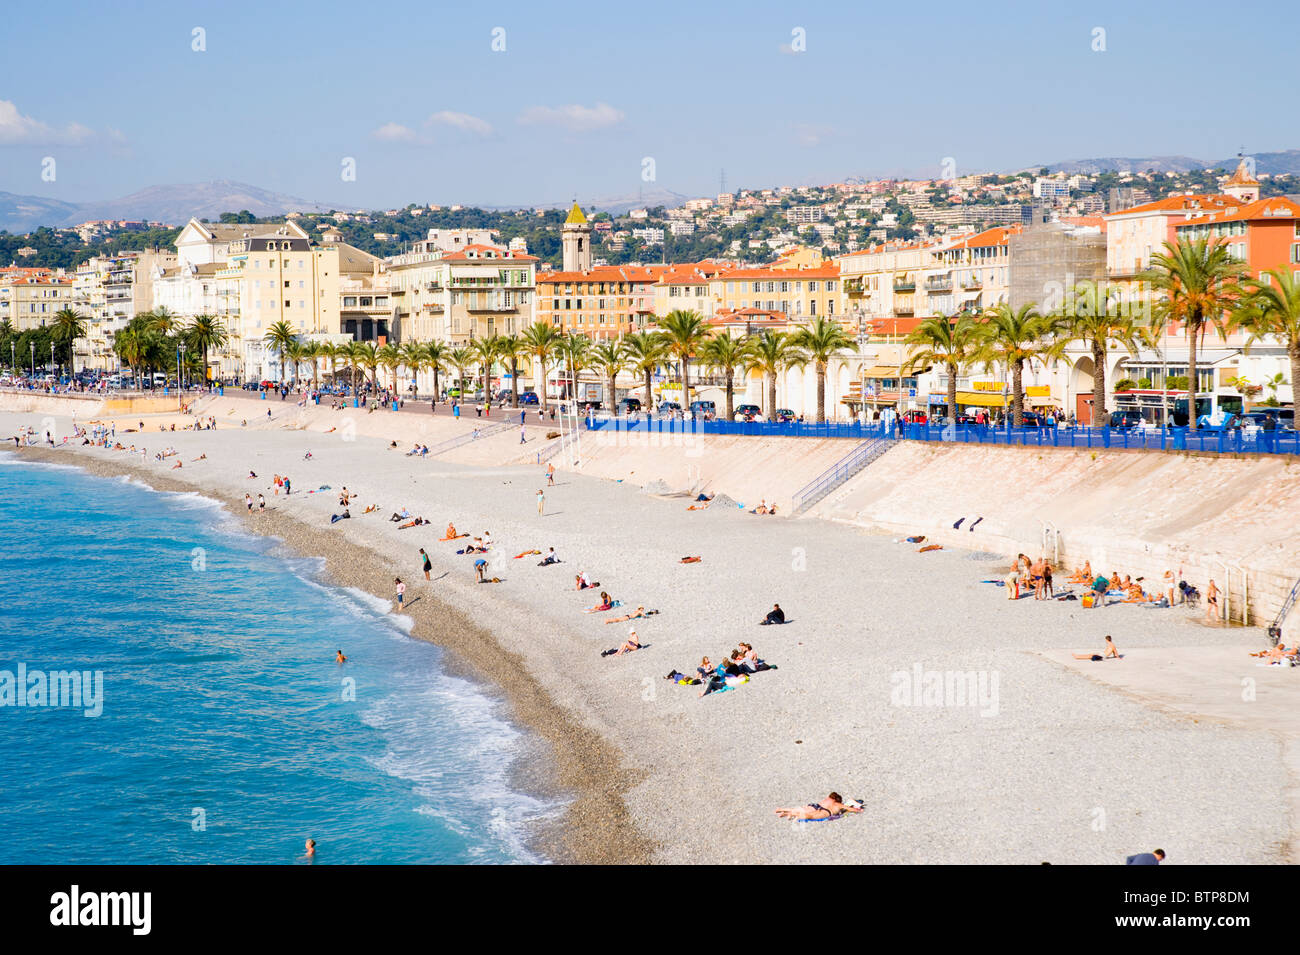 Promenade d'Anglais, Nice, Cote d'Azur, France Stock Photo